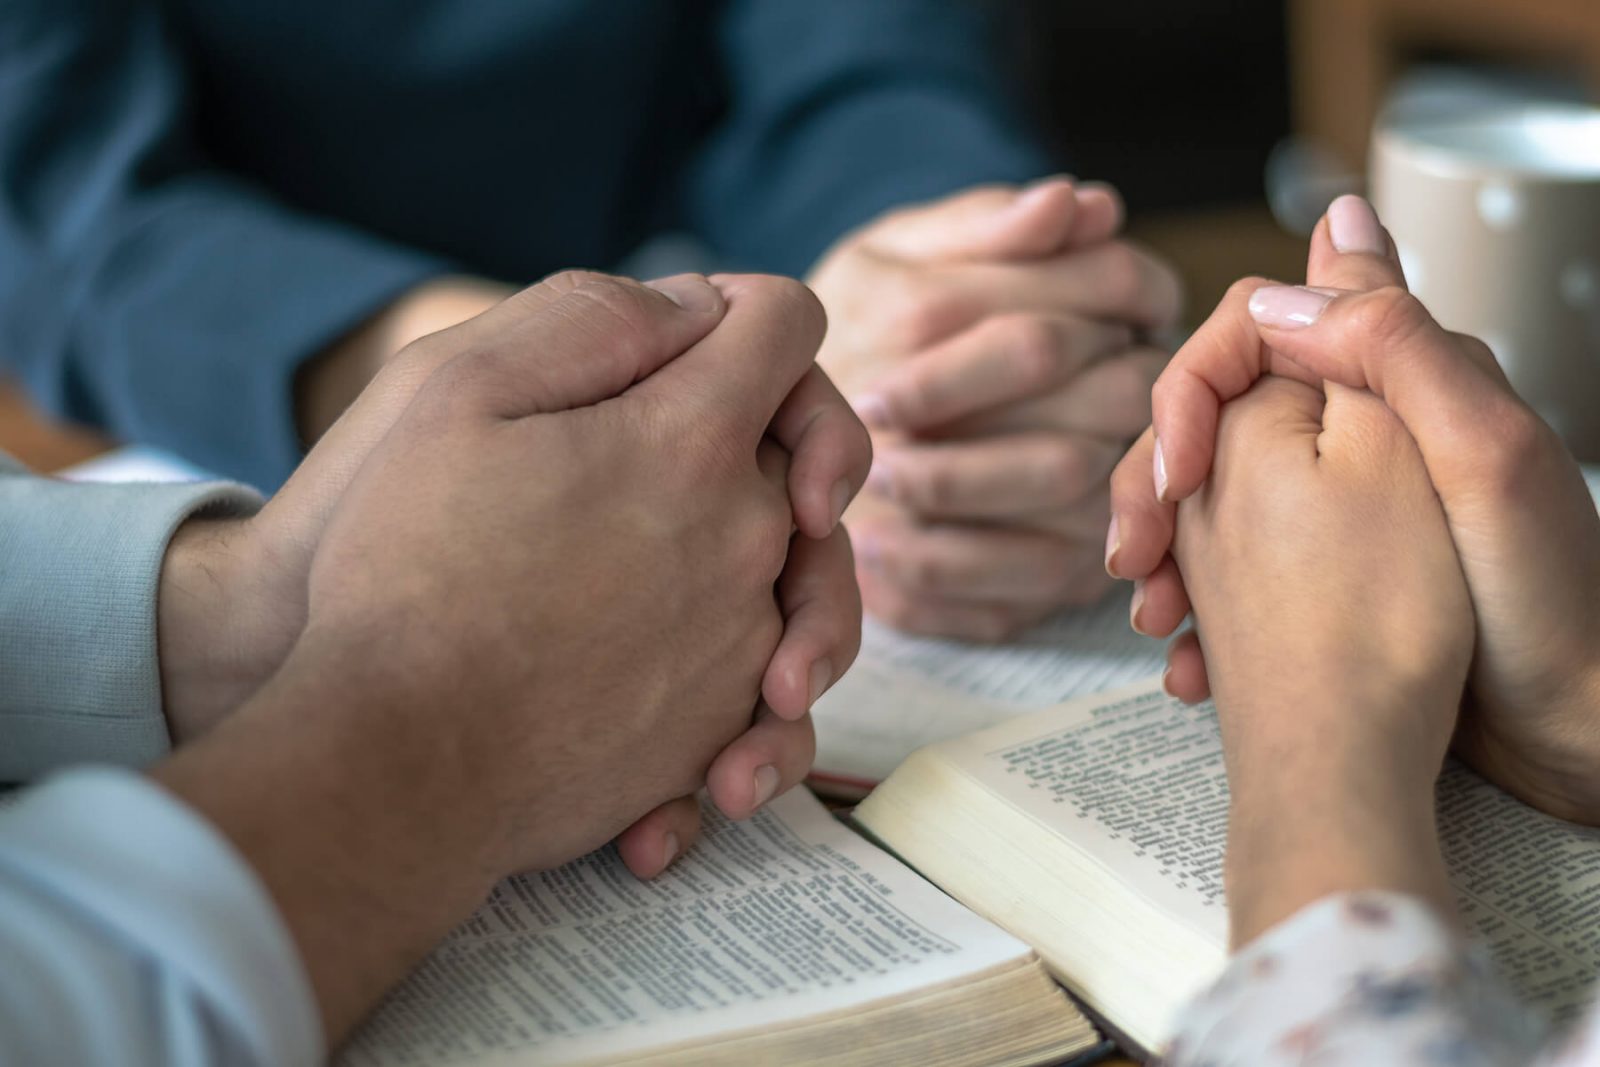 praying over bibles during bible study